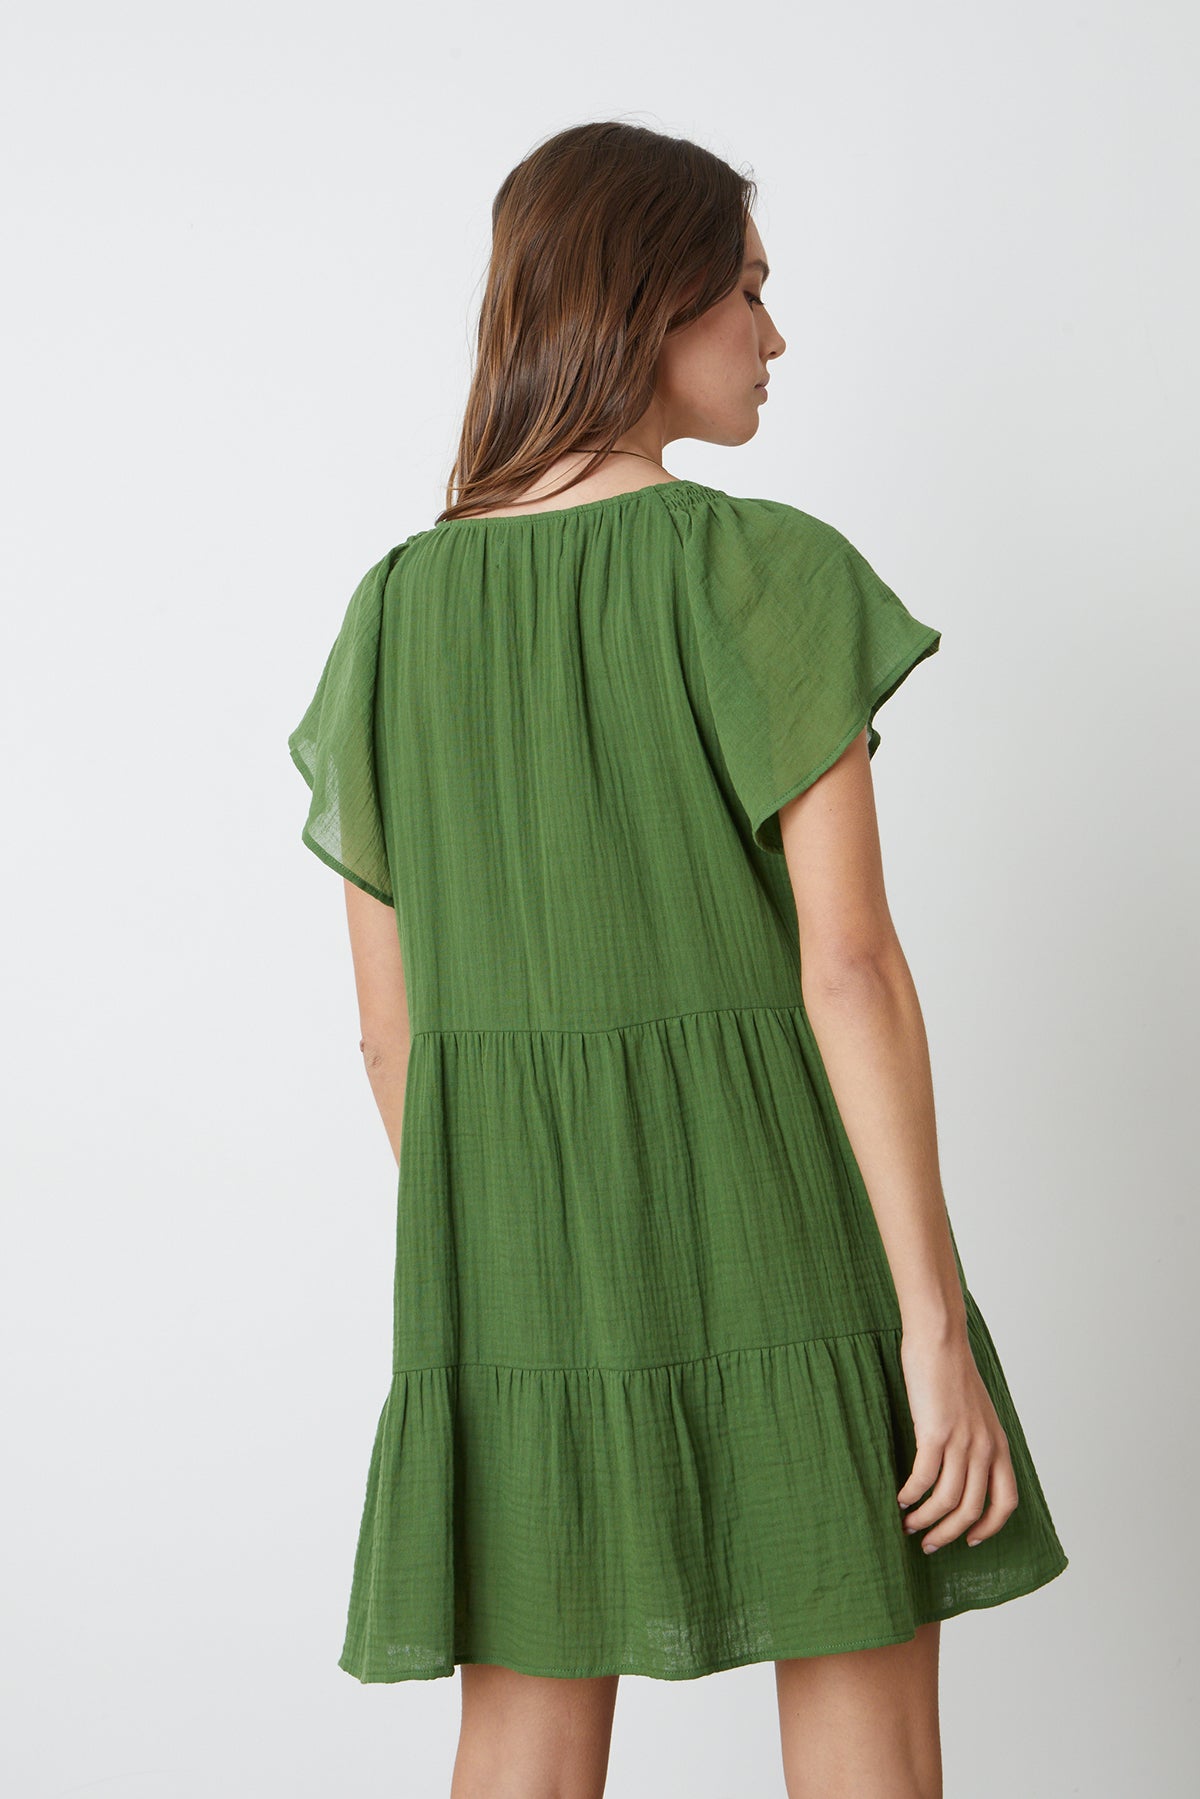  Eleanor Tiered Dress in garden green cotton gauze back-26262138192065